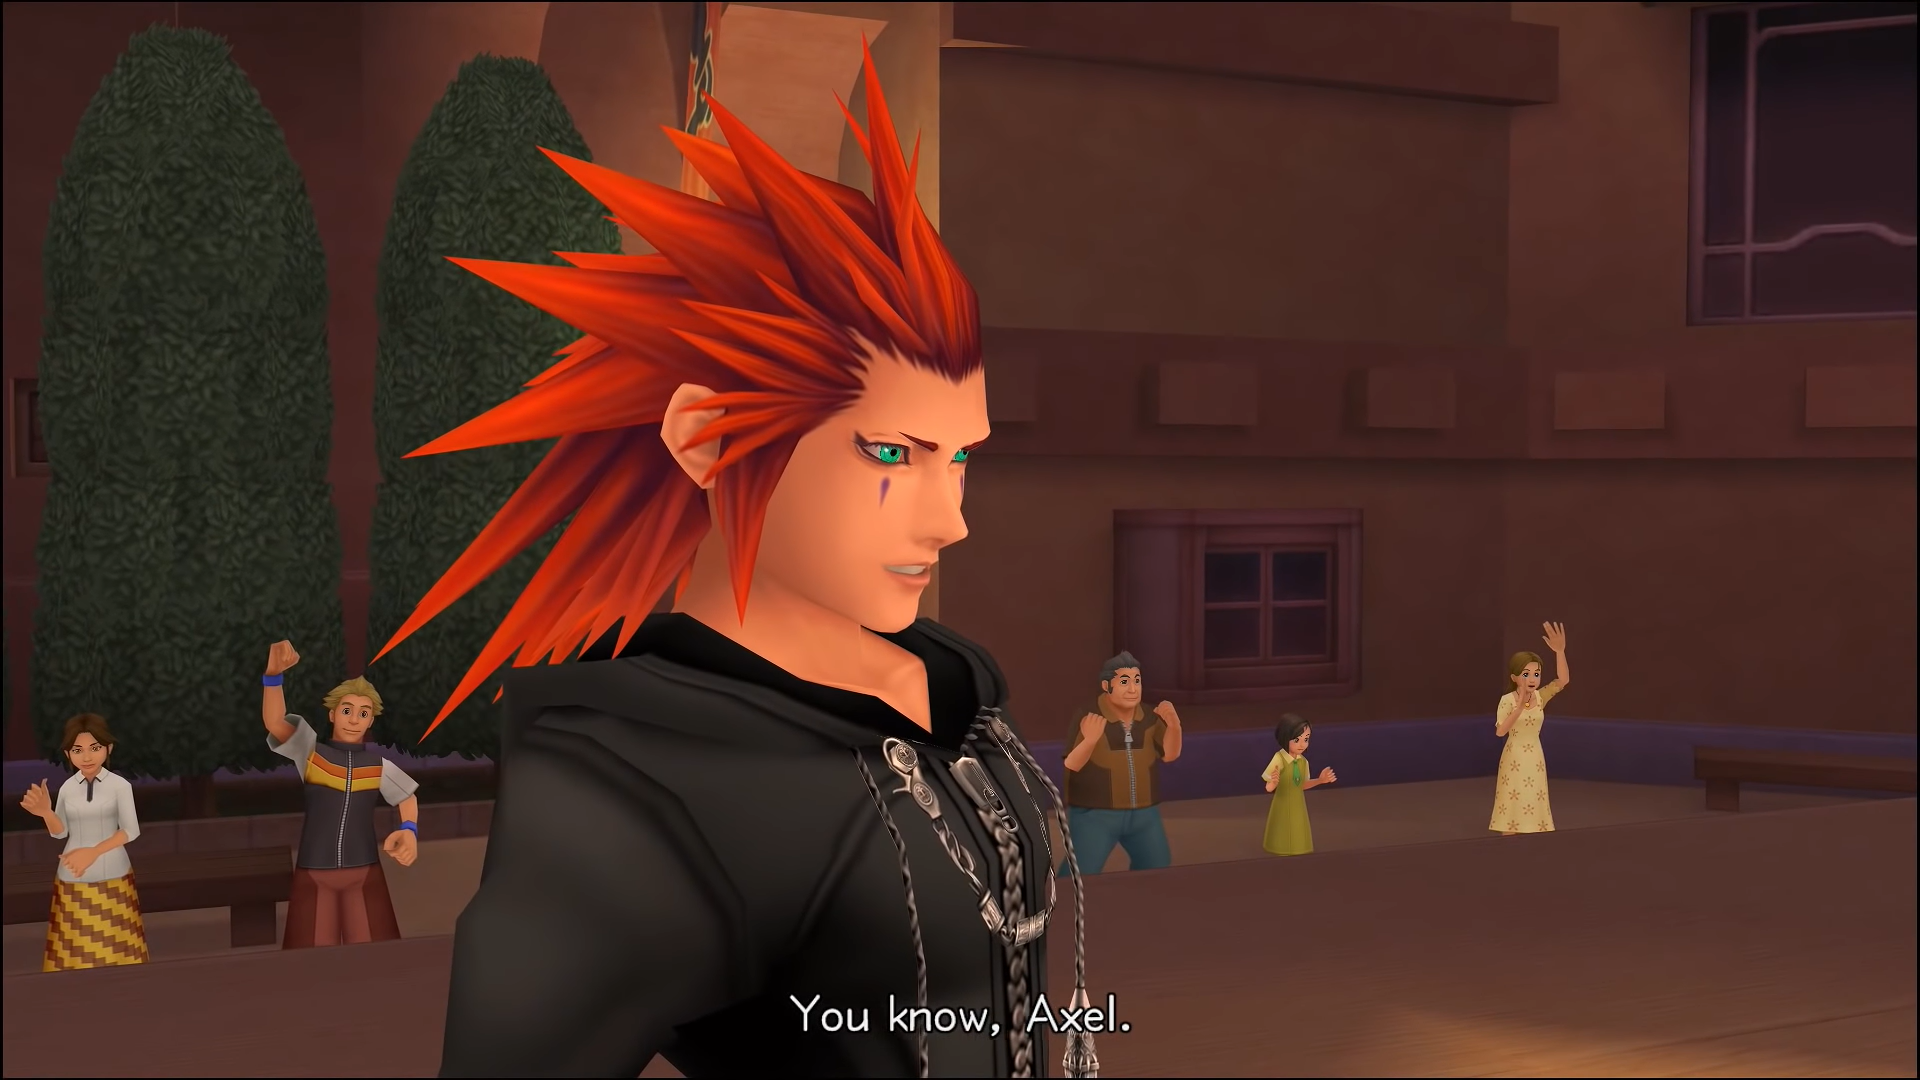 "kingdom Hearts II". 2007. Square Enix. Axel introduces himself.